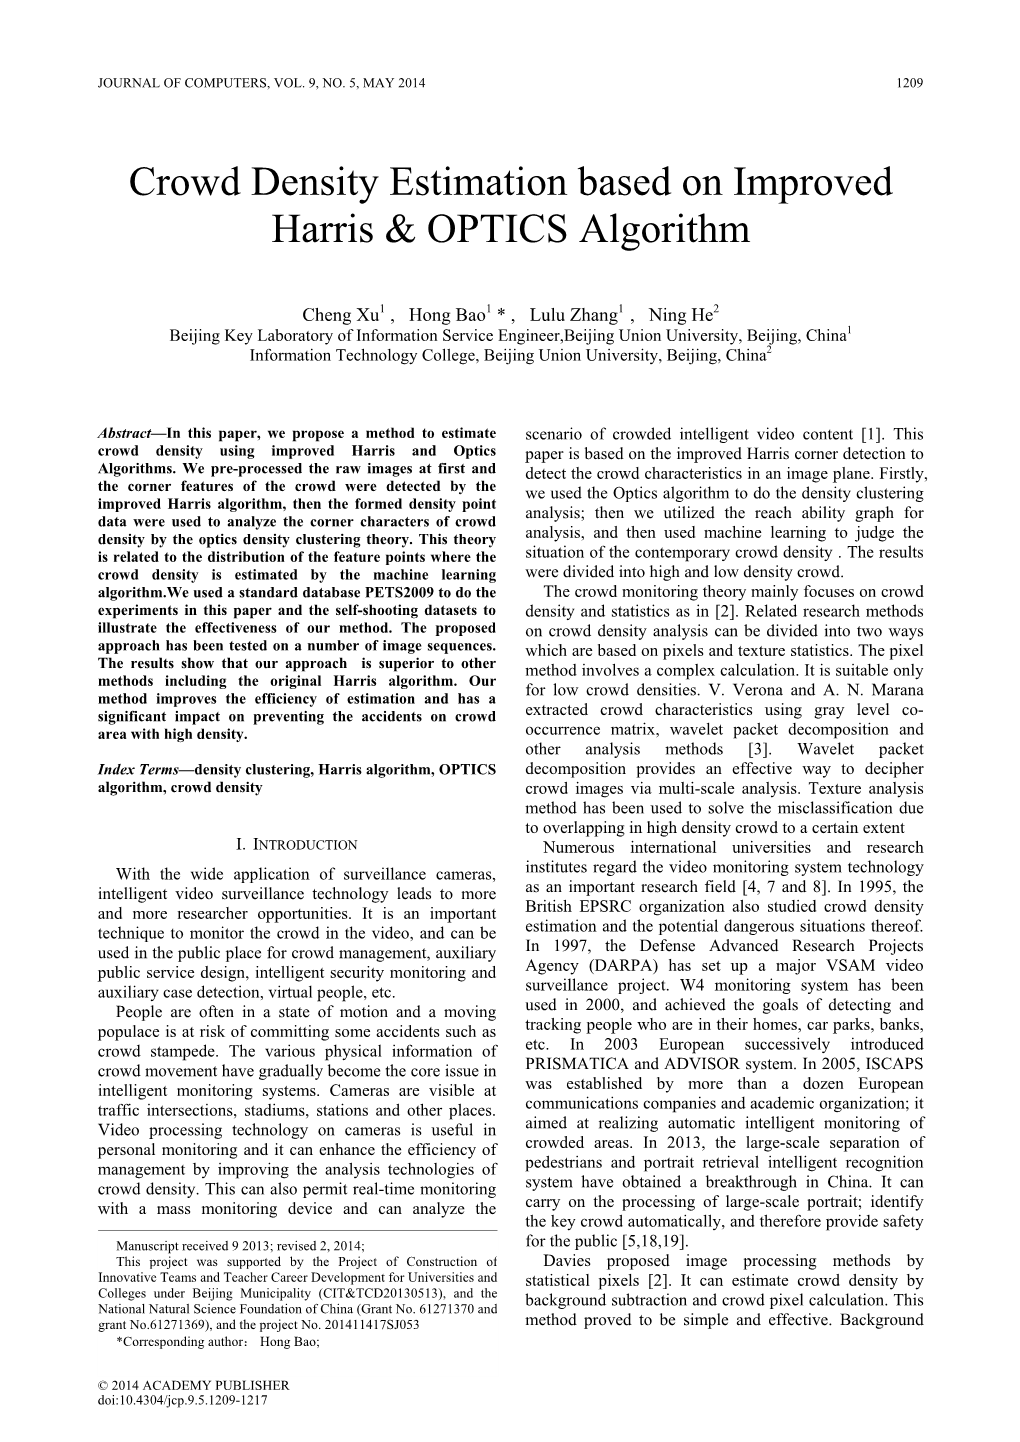 Crowd Density Estimation Based on Improved Harris & OPTICS Algorithm